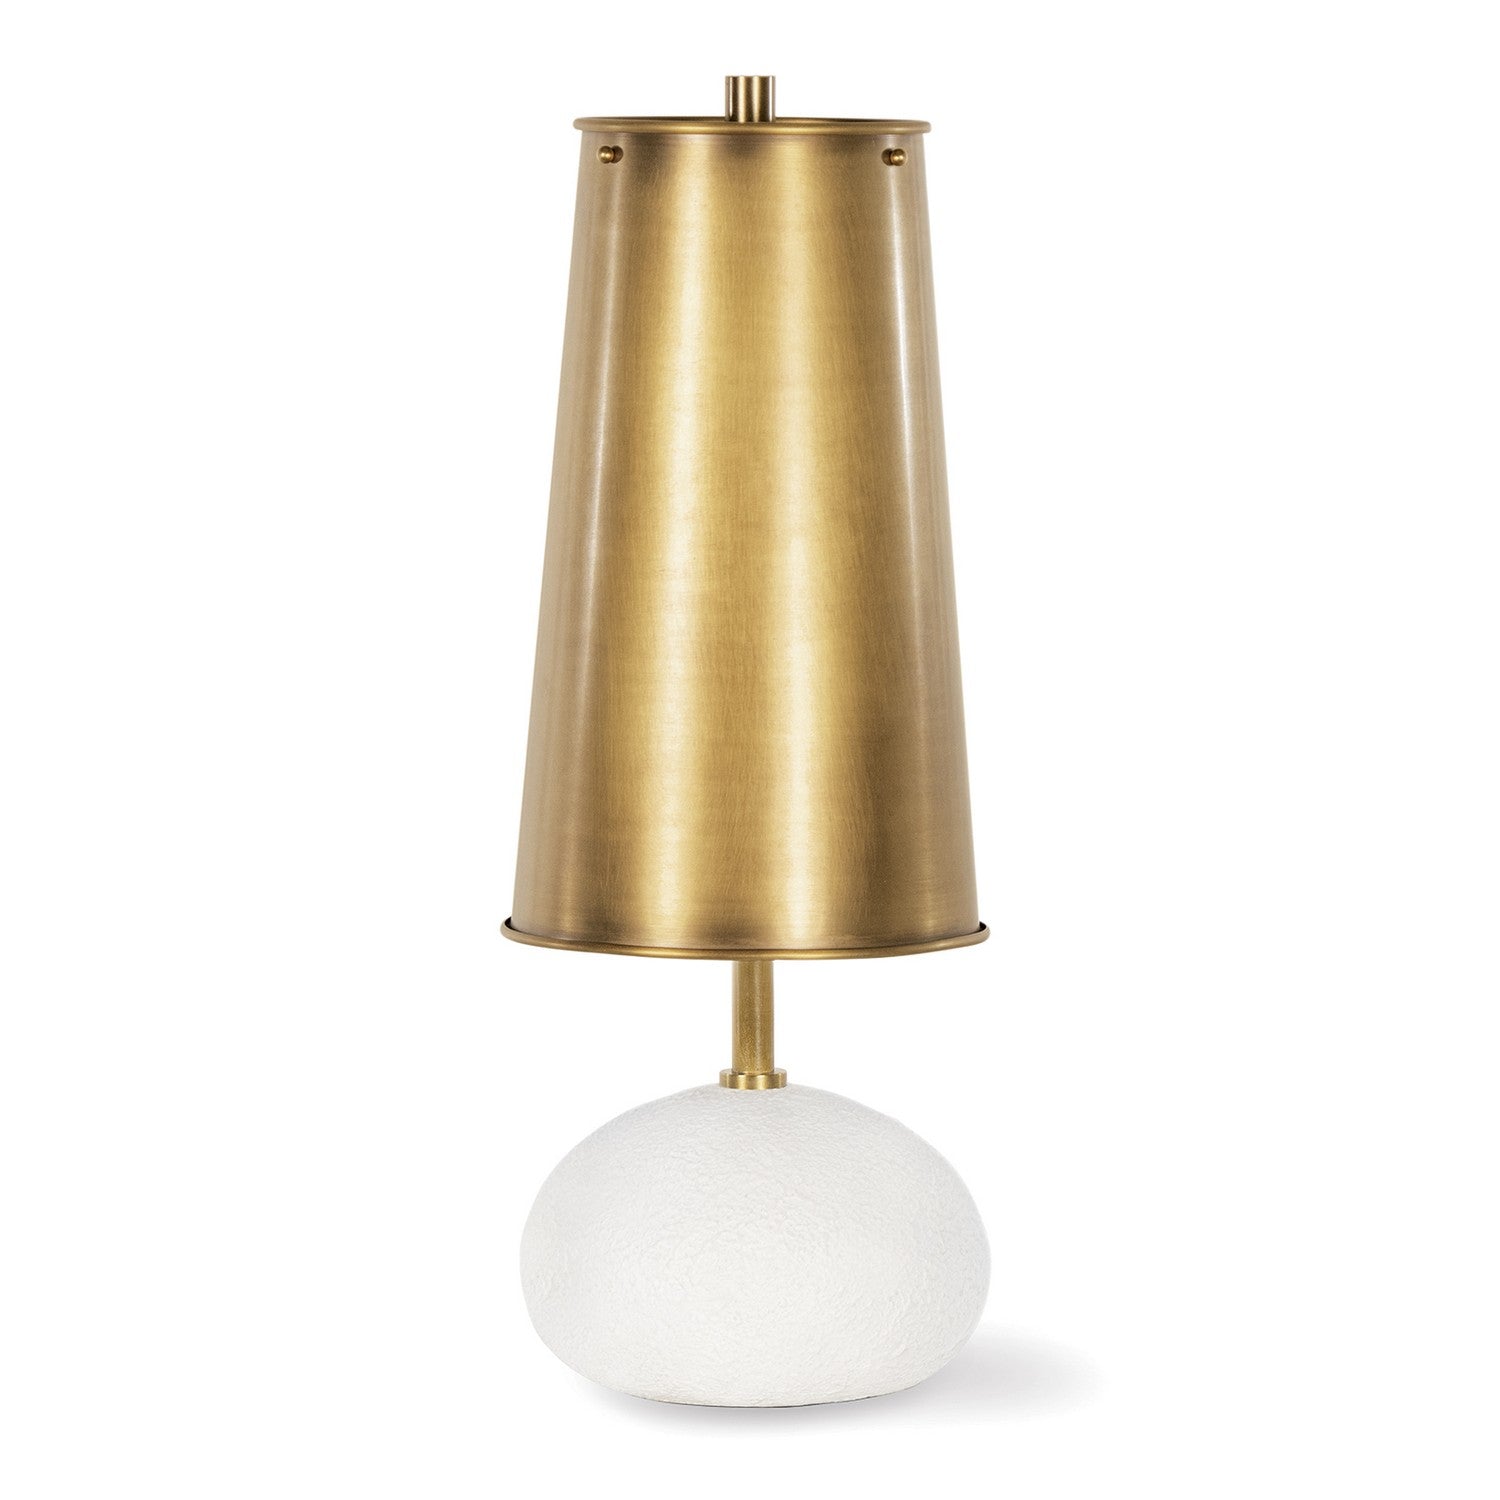 Regina Andrew - 13-1550NB - One Light Mini Lamp - Hattie - Natural Brass